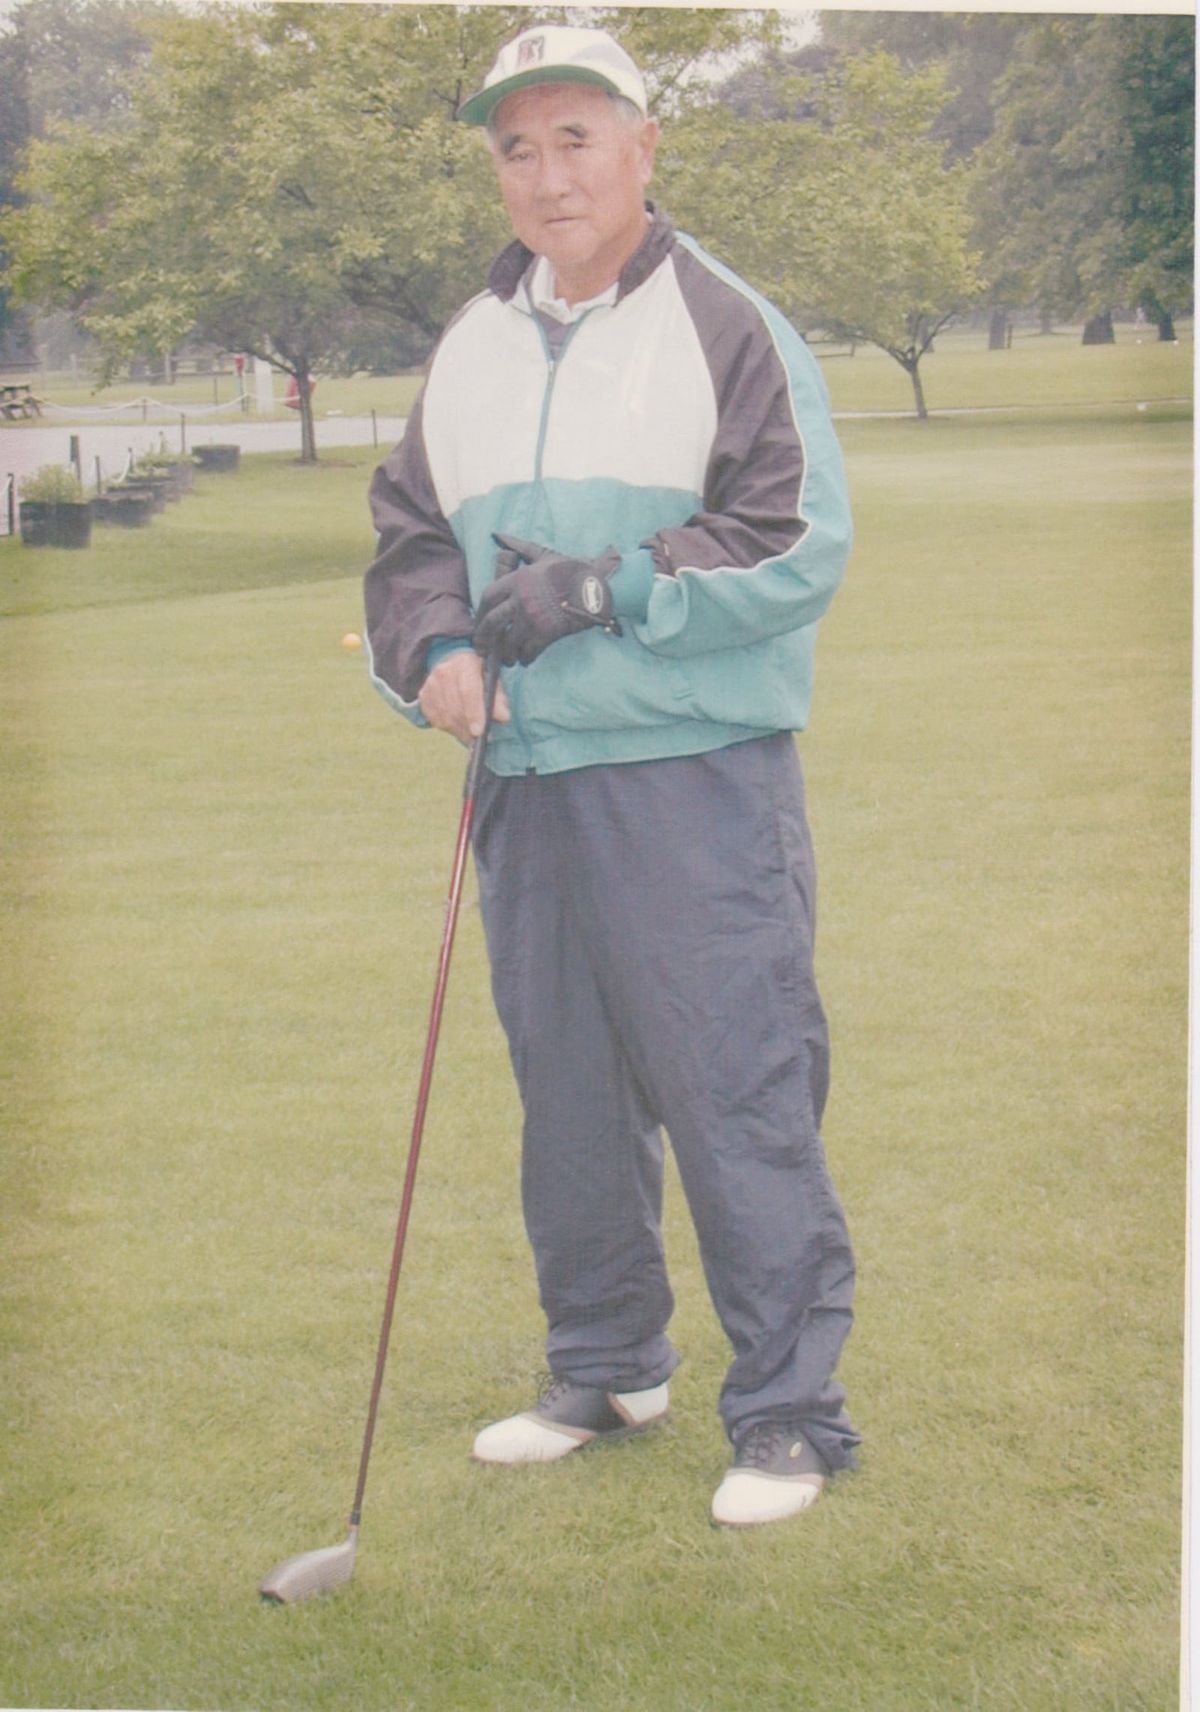 An athlete all his life, Yosh Yamada enjoyed golfing.